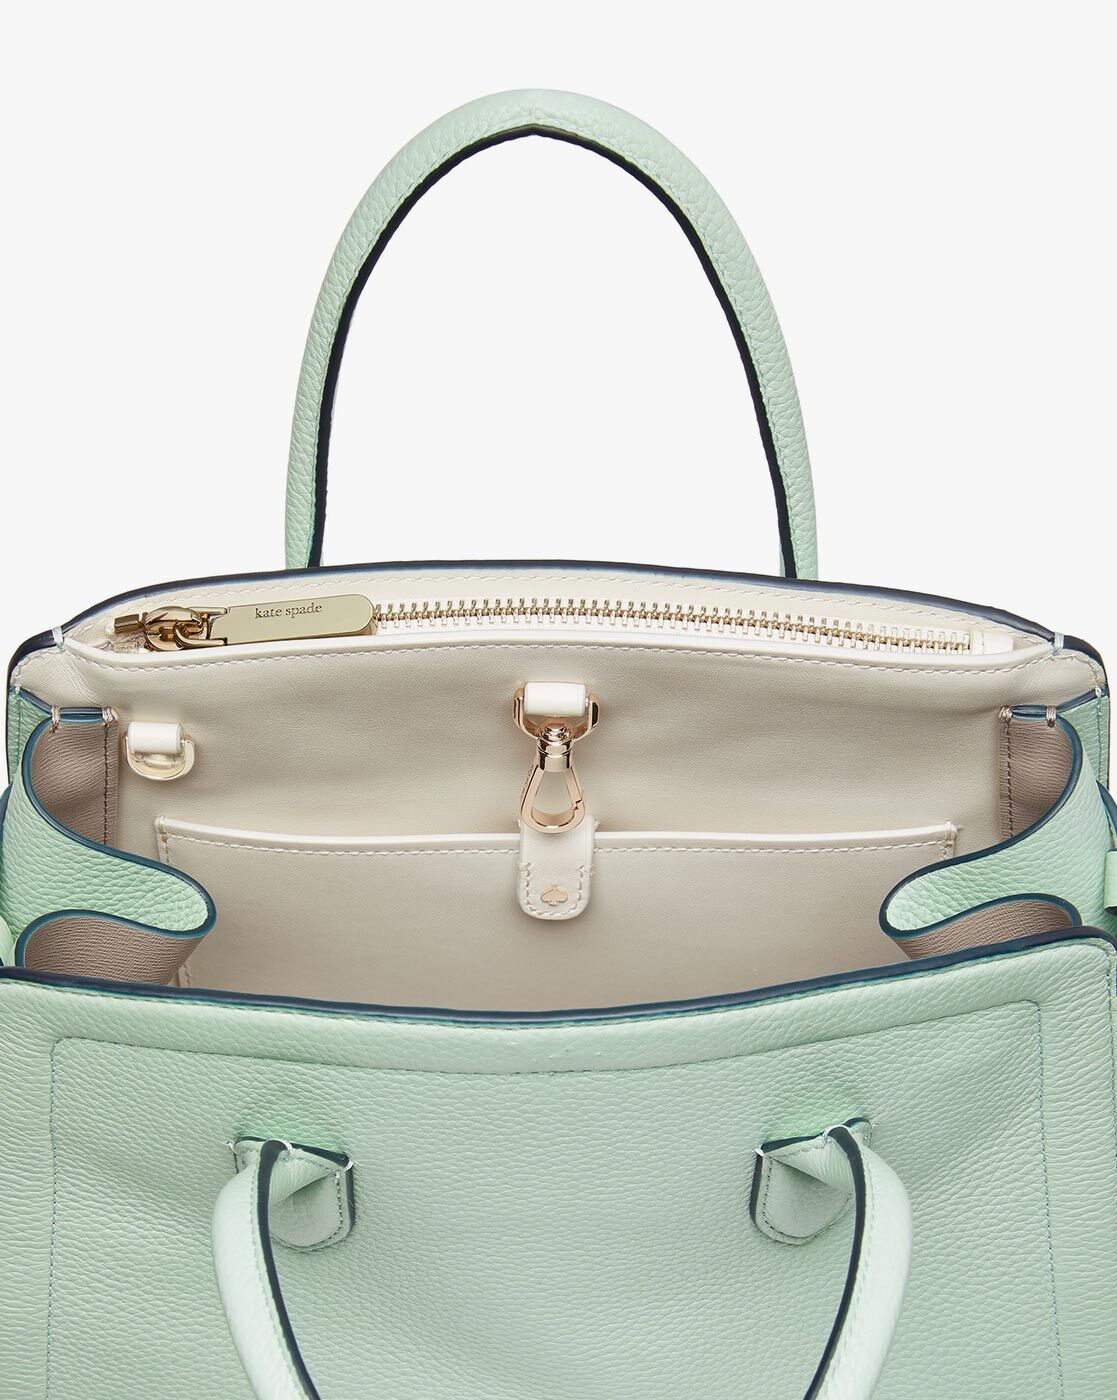 Kate Spade Patent Leather Handbag Satchel Teal Turquoise EUC!!